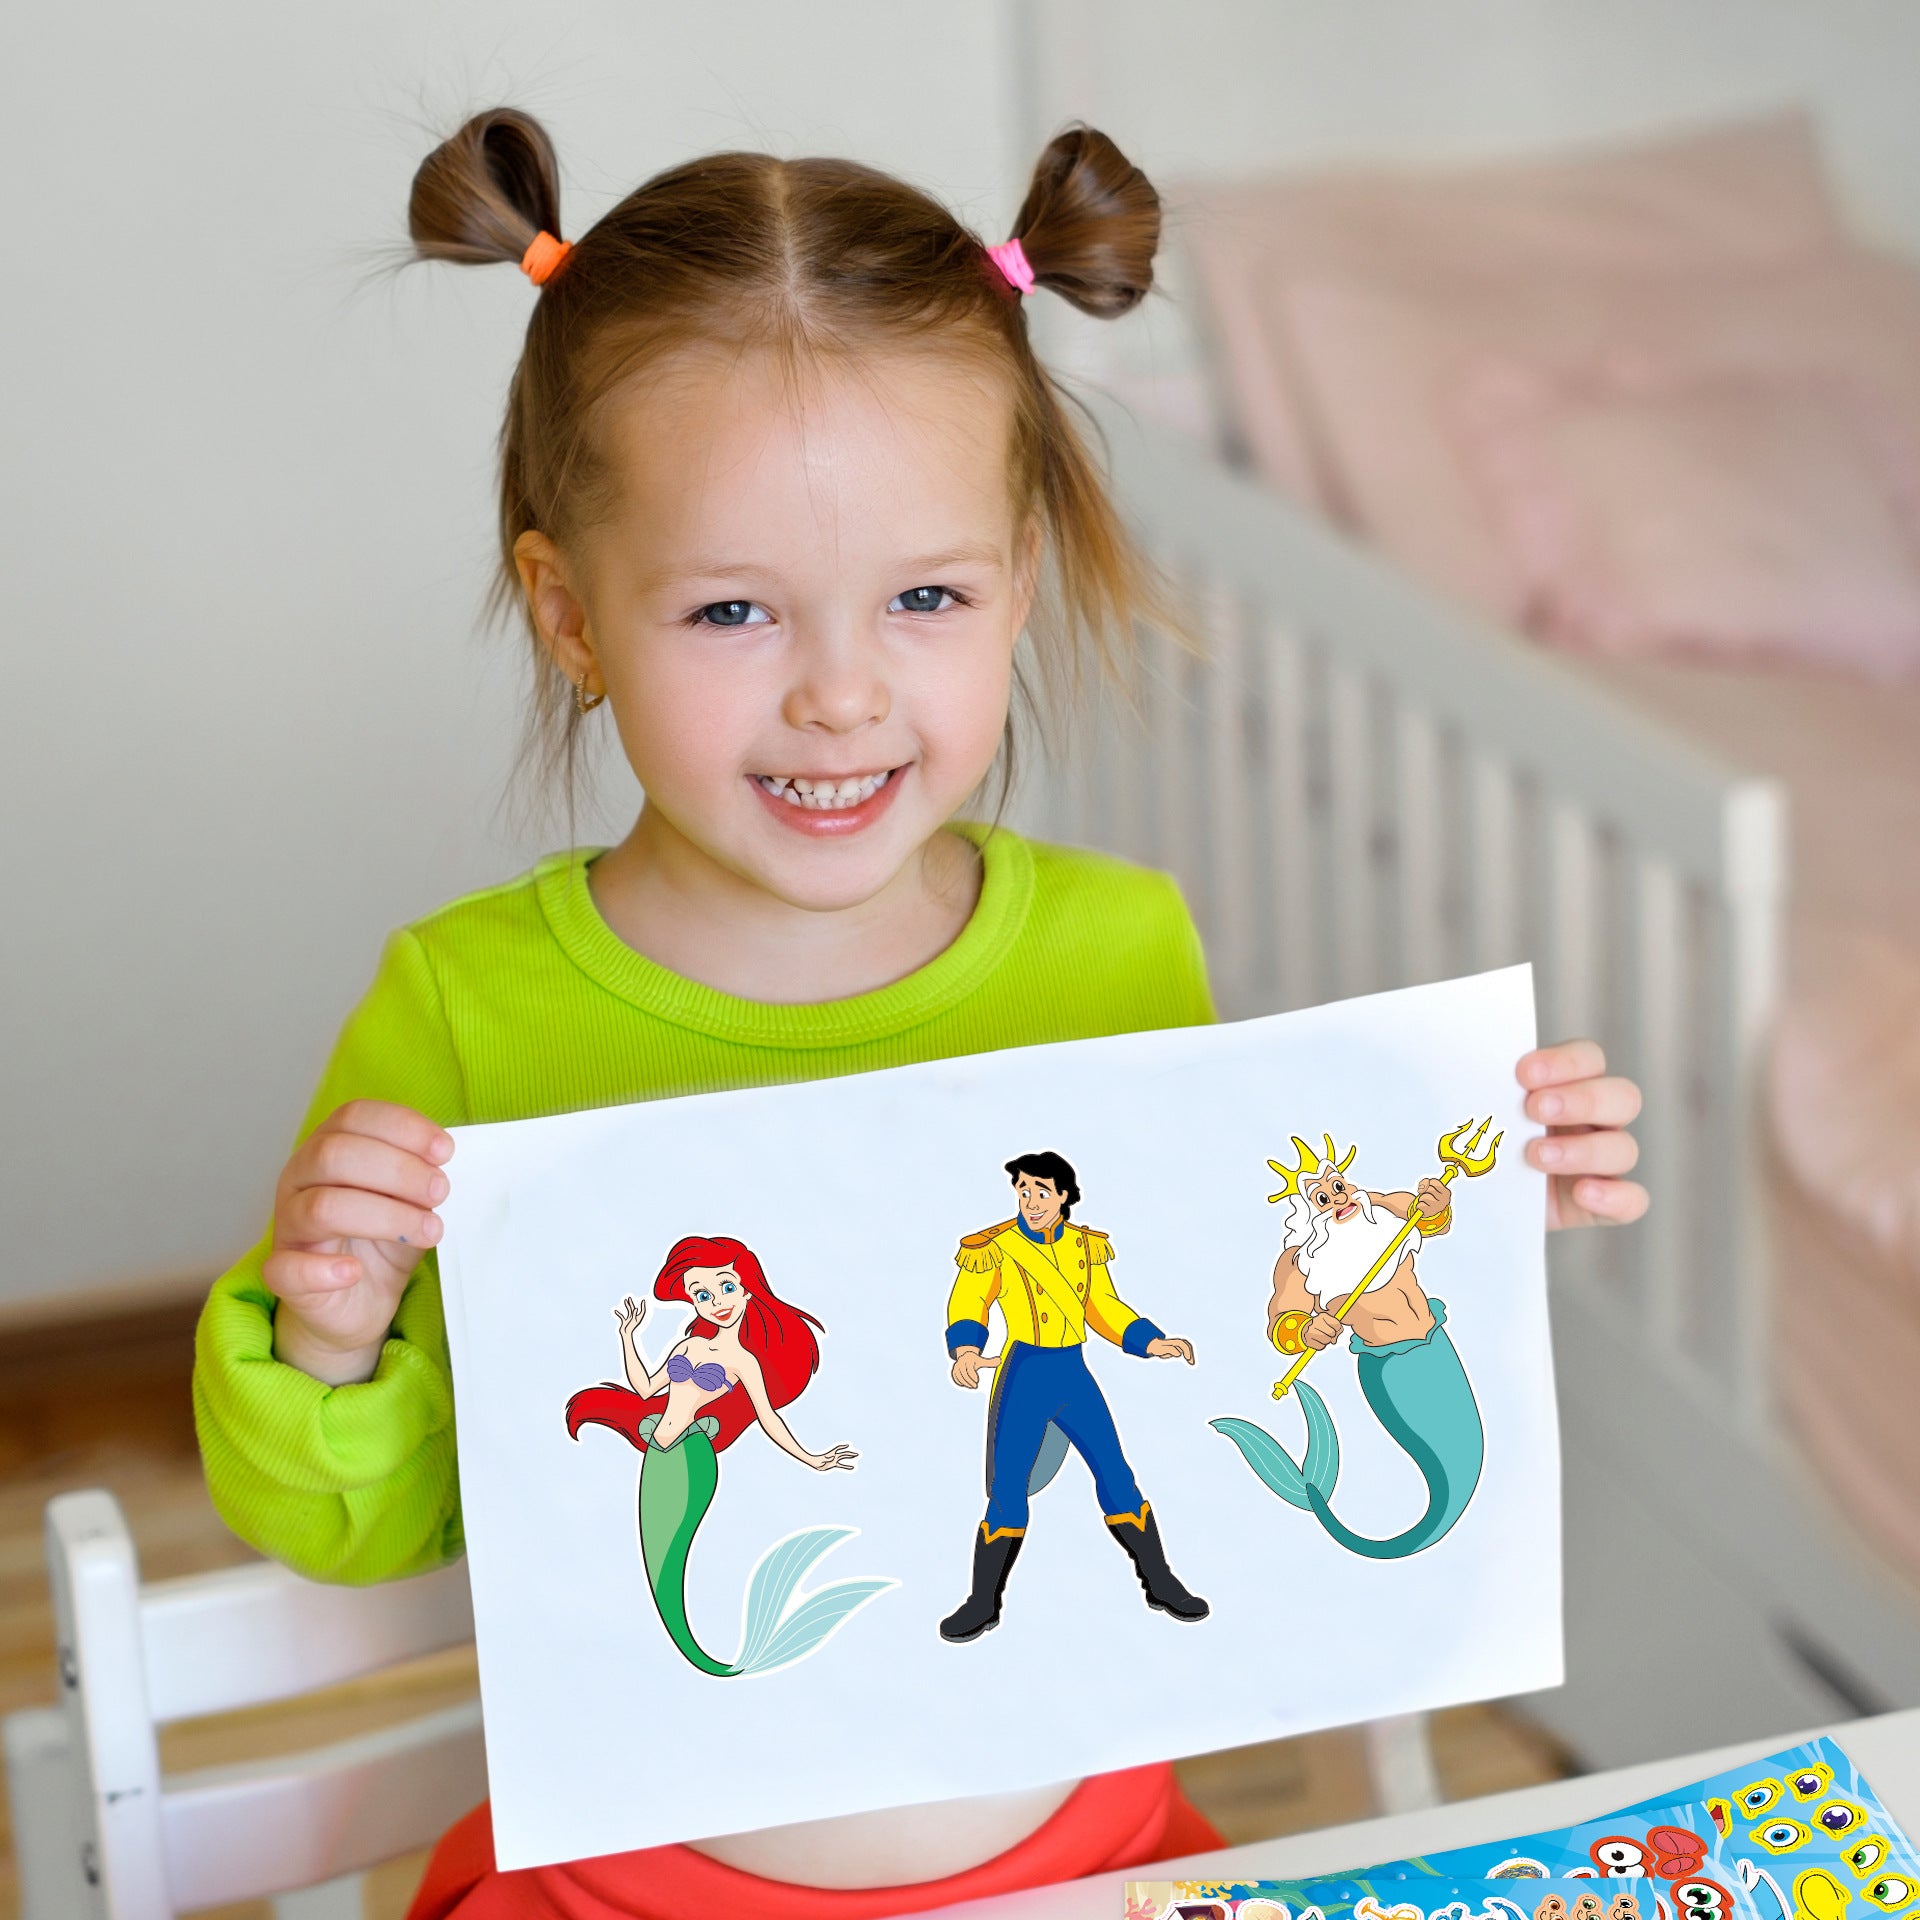 32Pcs Cartoon Mermaid Make a Face Stickers for Kids Girls